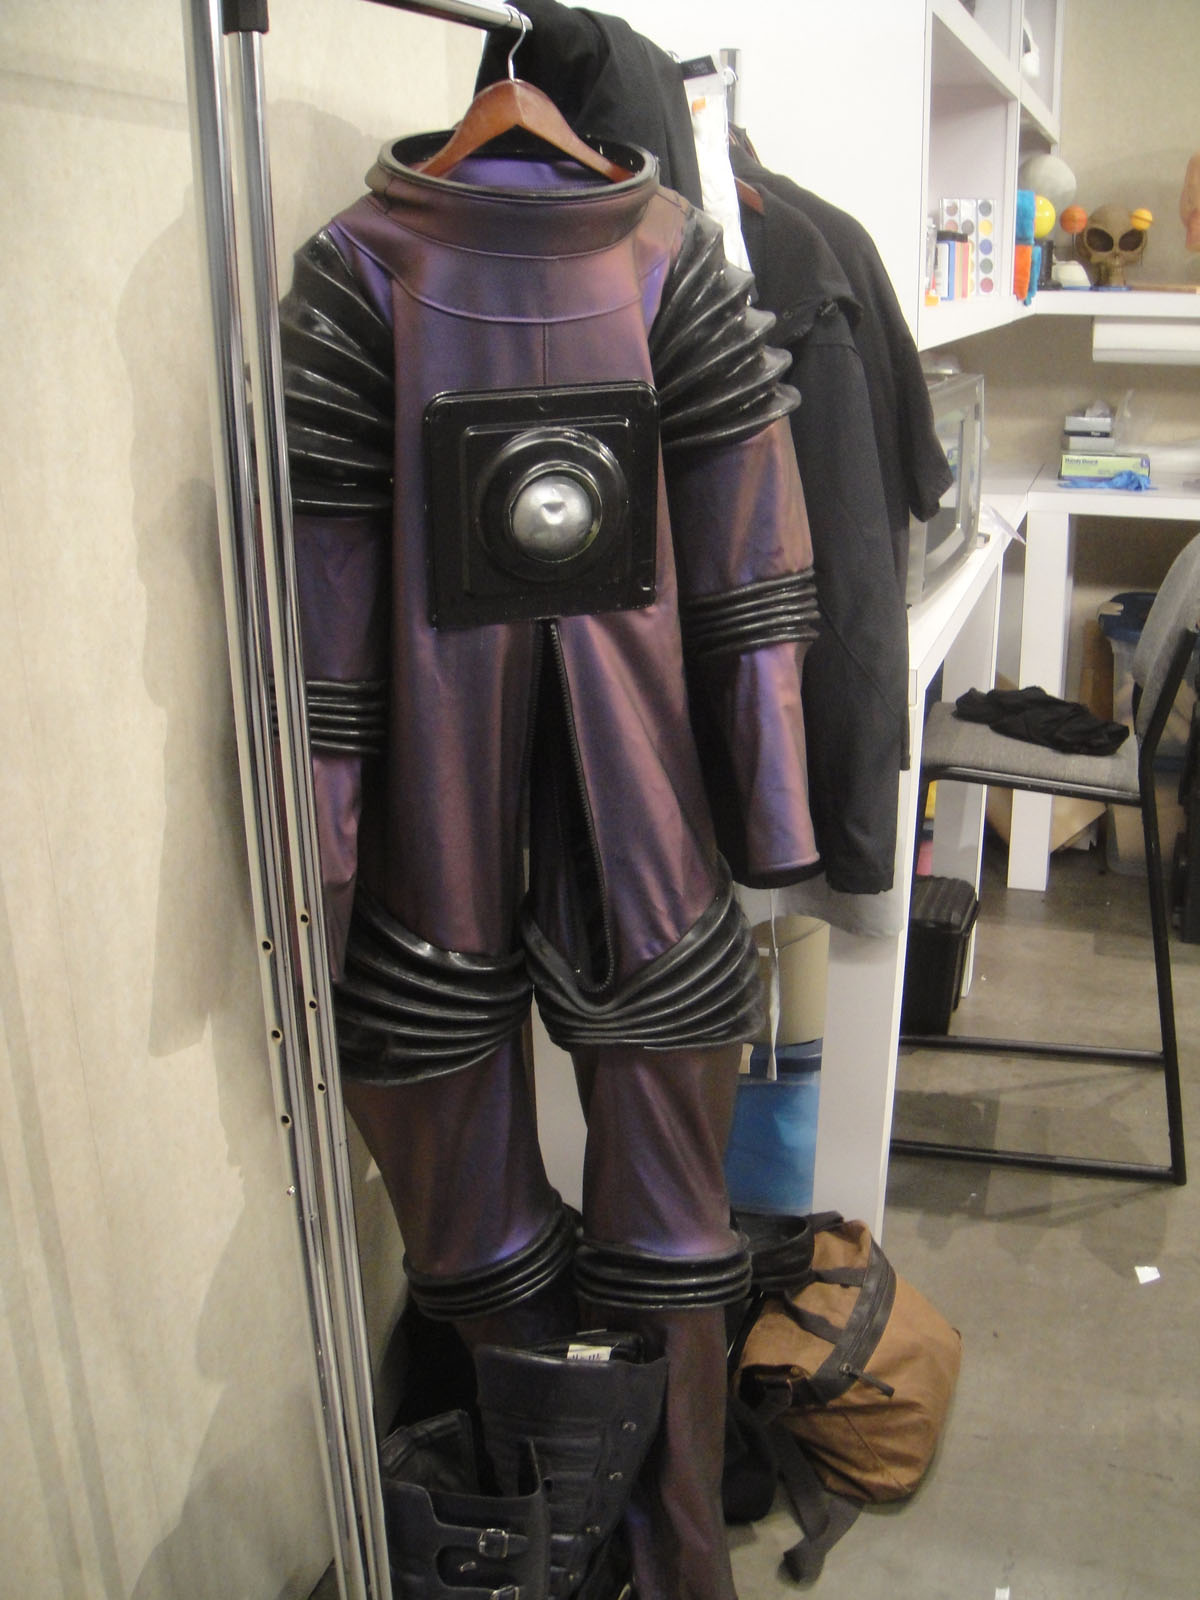 File:CES 2012 - Sony Men in Black 3 alien costume (6764369521).jpg -  Wikimedia Commons